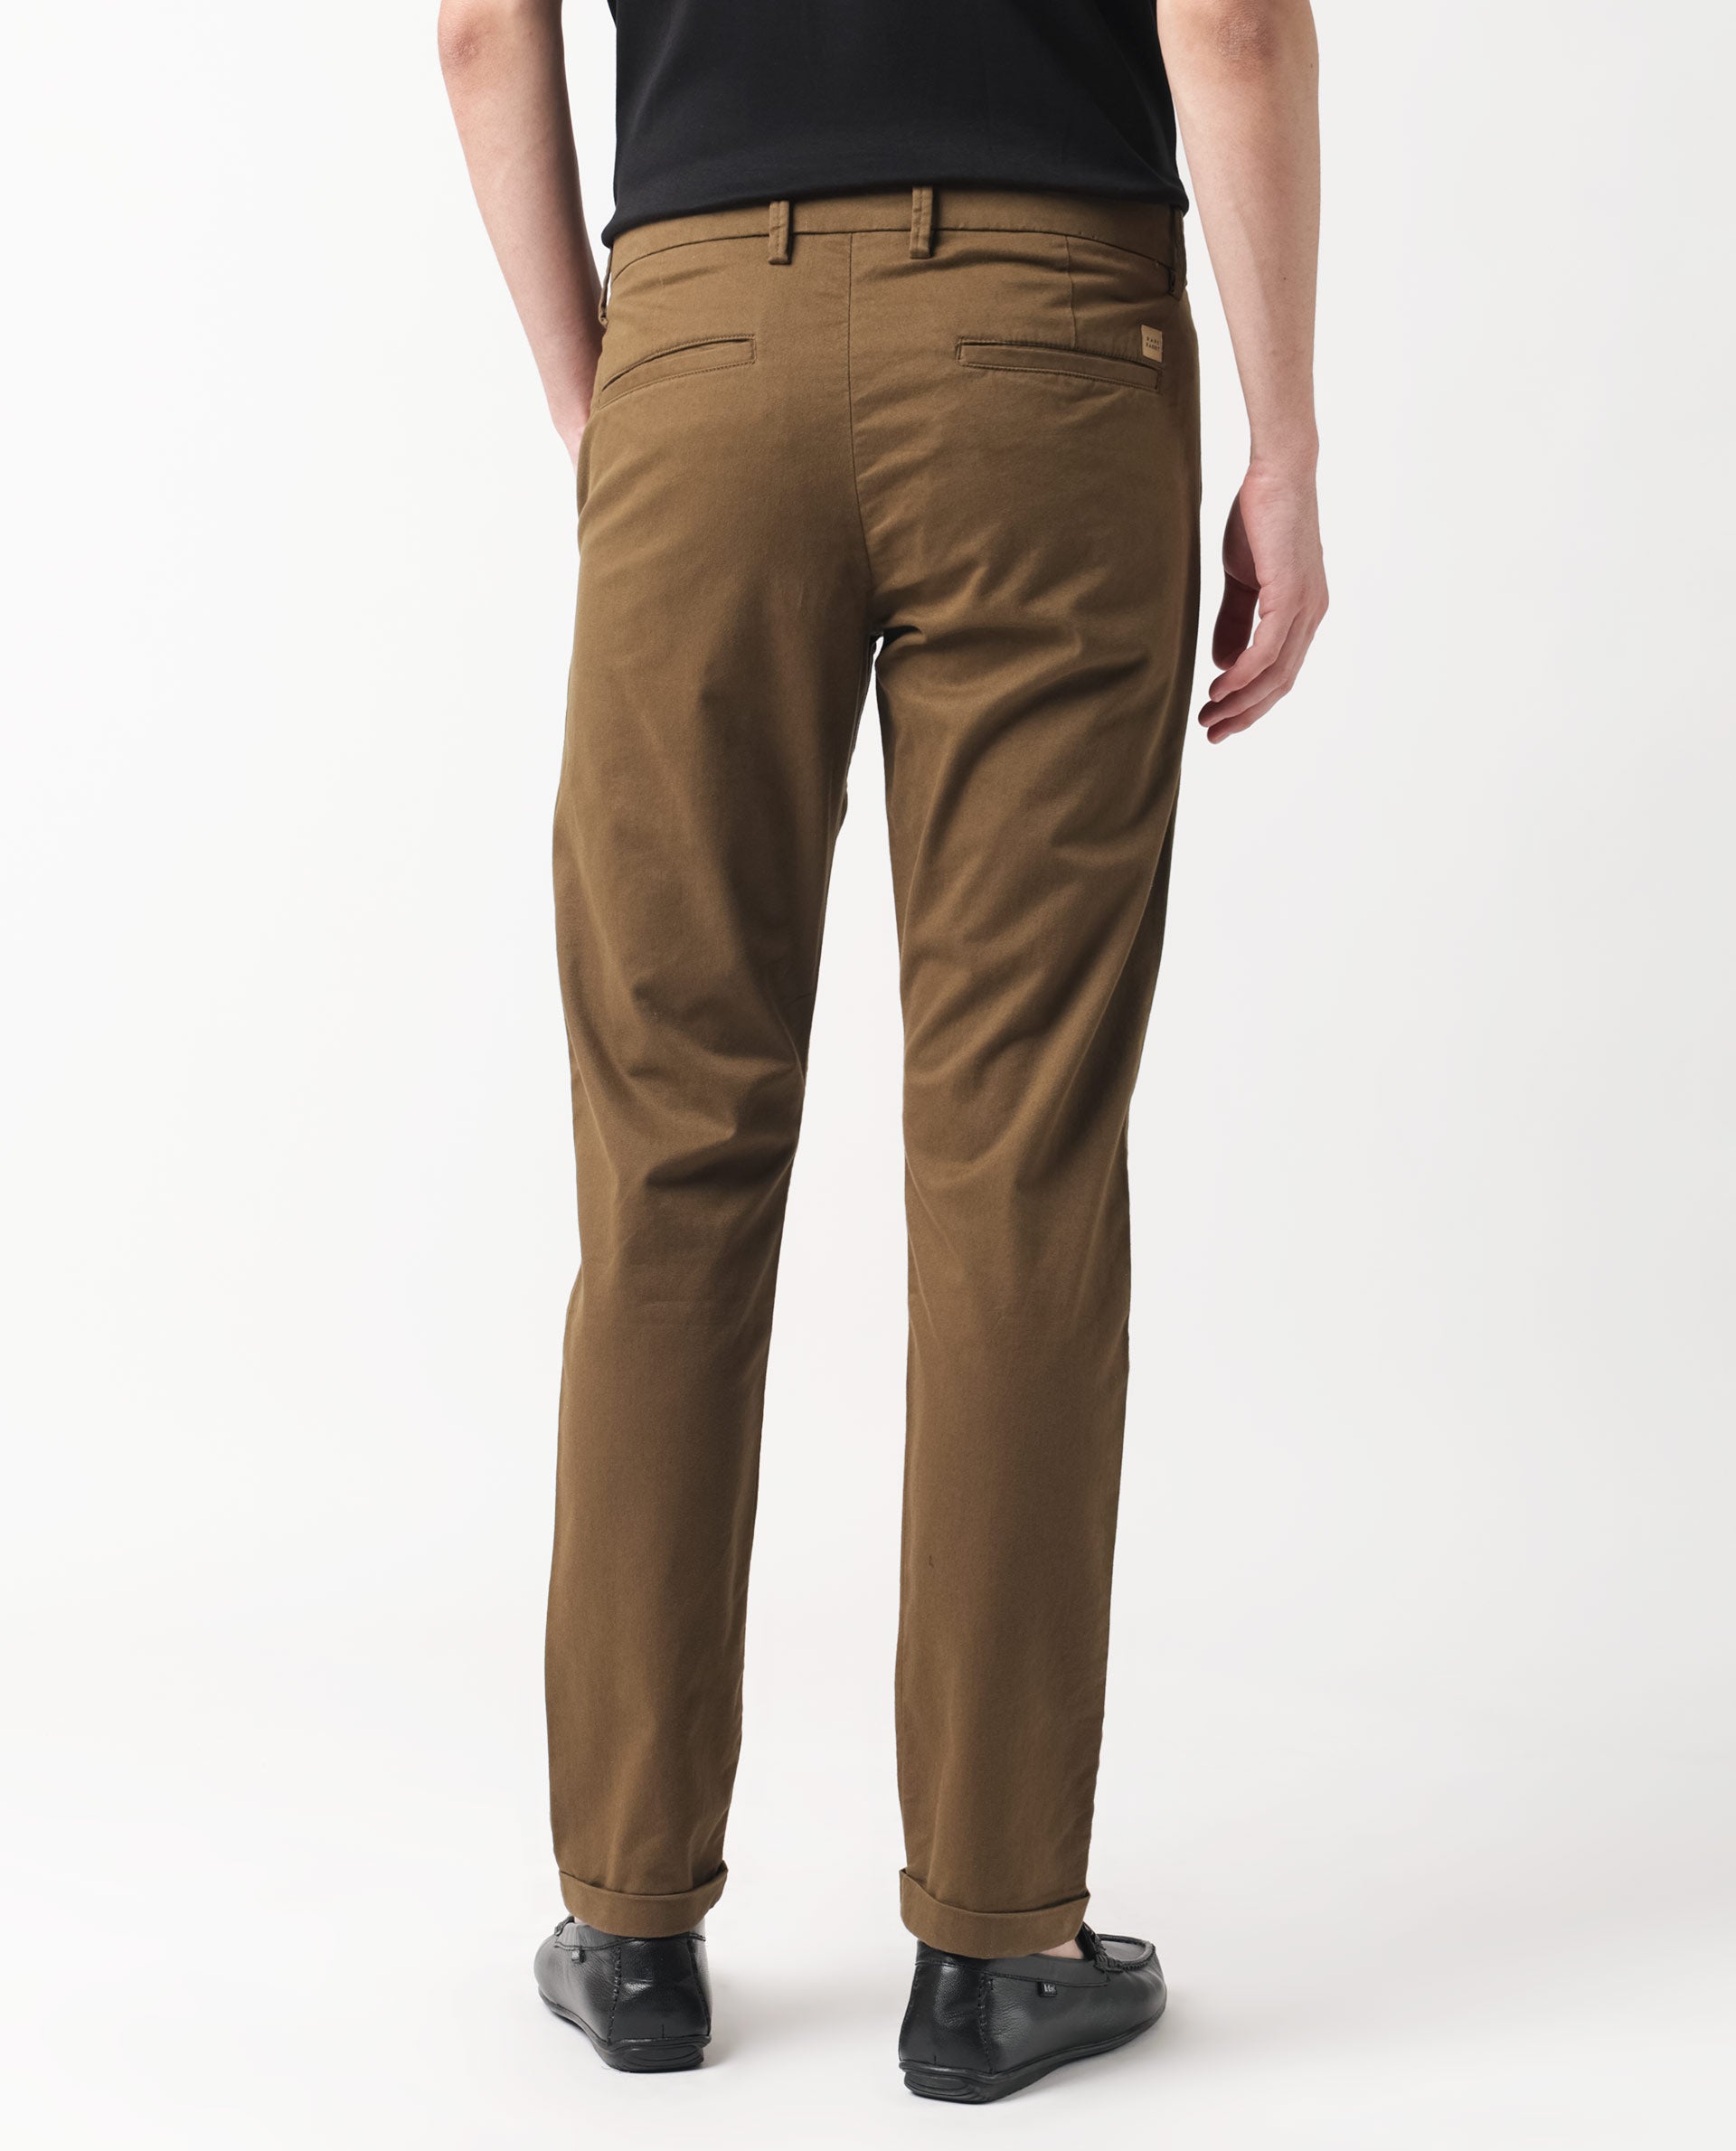 Next Look Men Brown Trousers - Buy Next Look Men Brown Trousers Online at  Best Prices in India | Flipkart.com